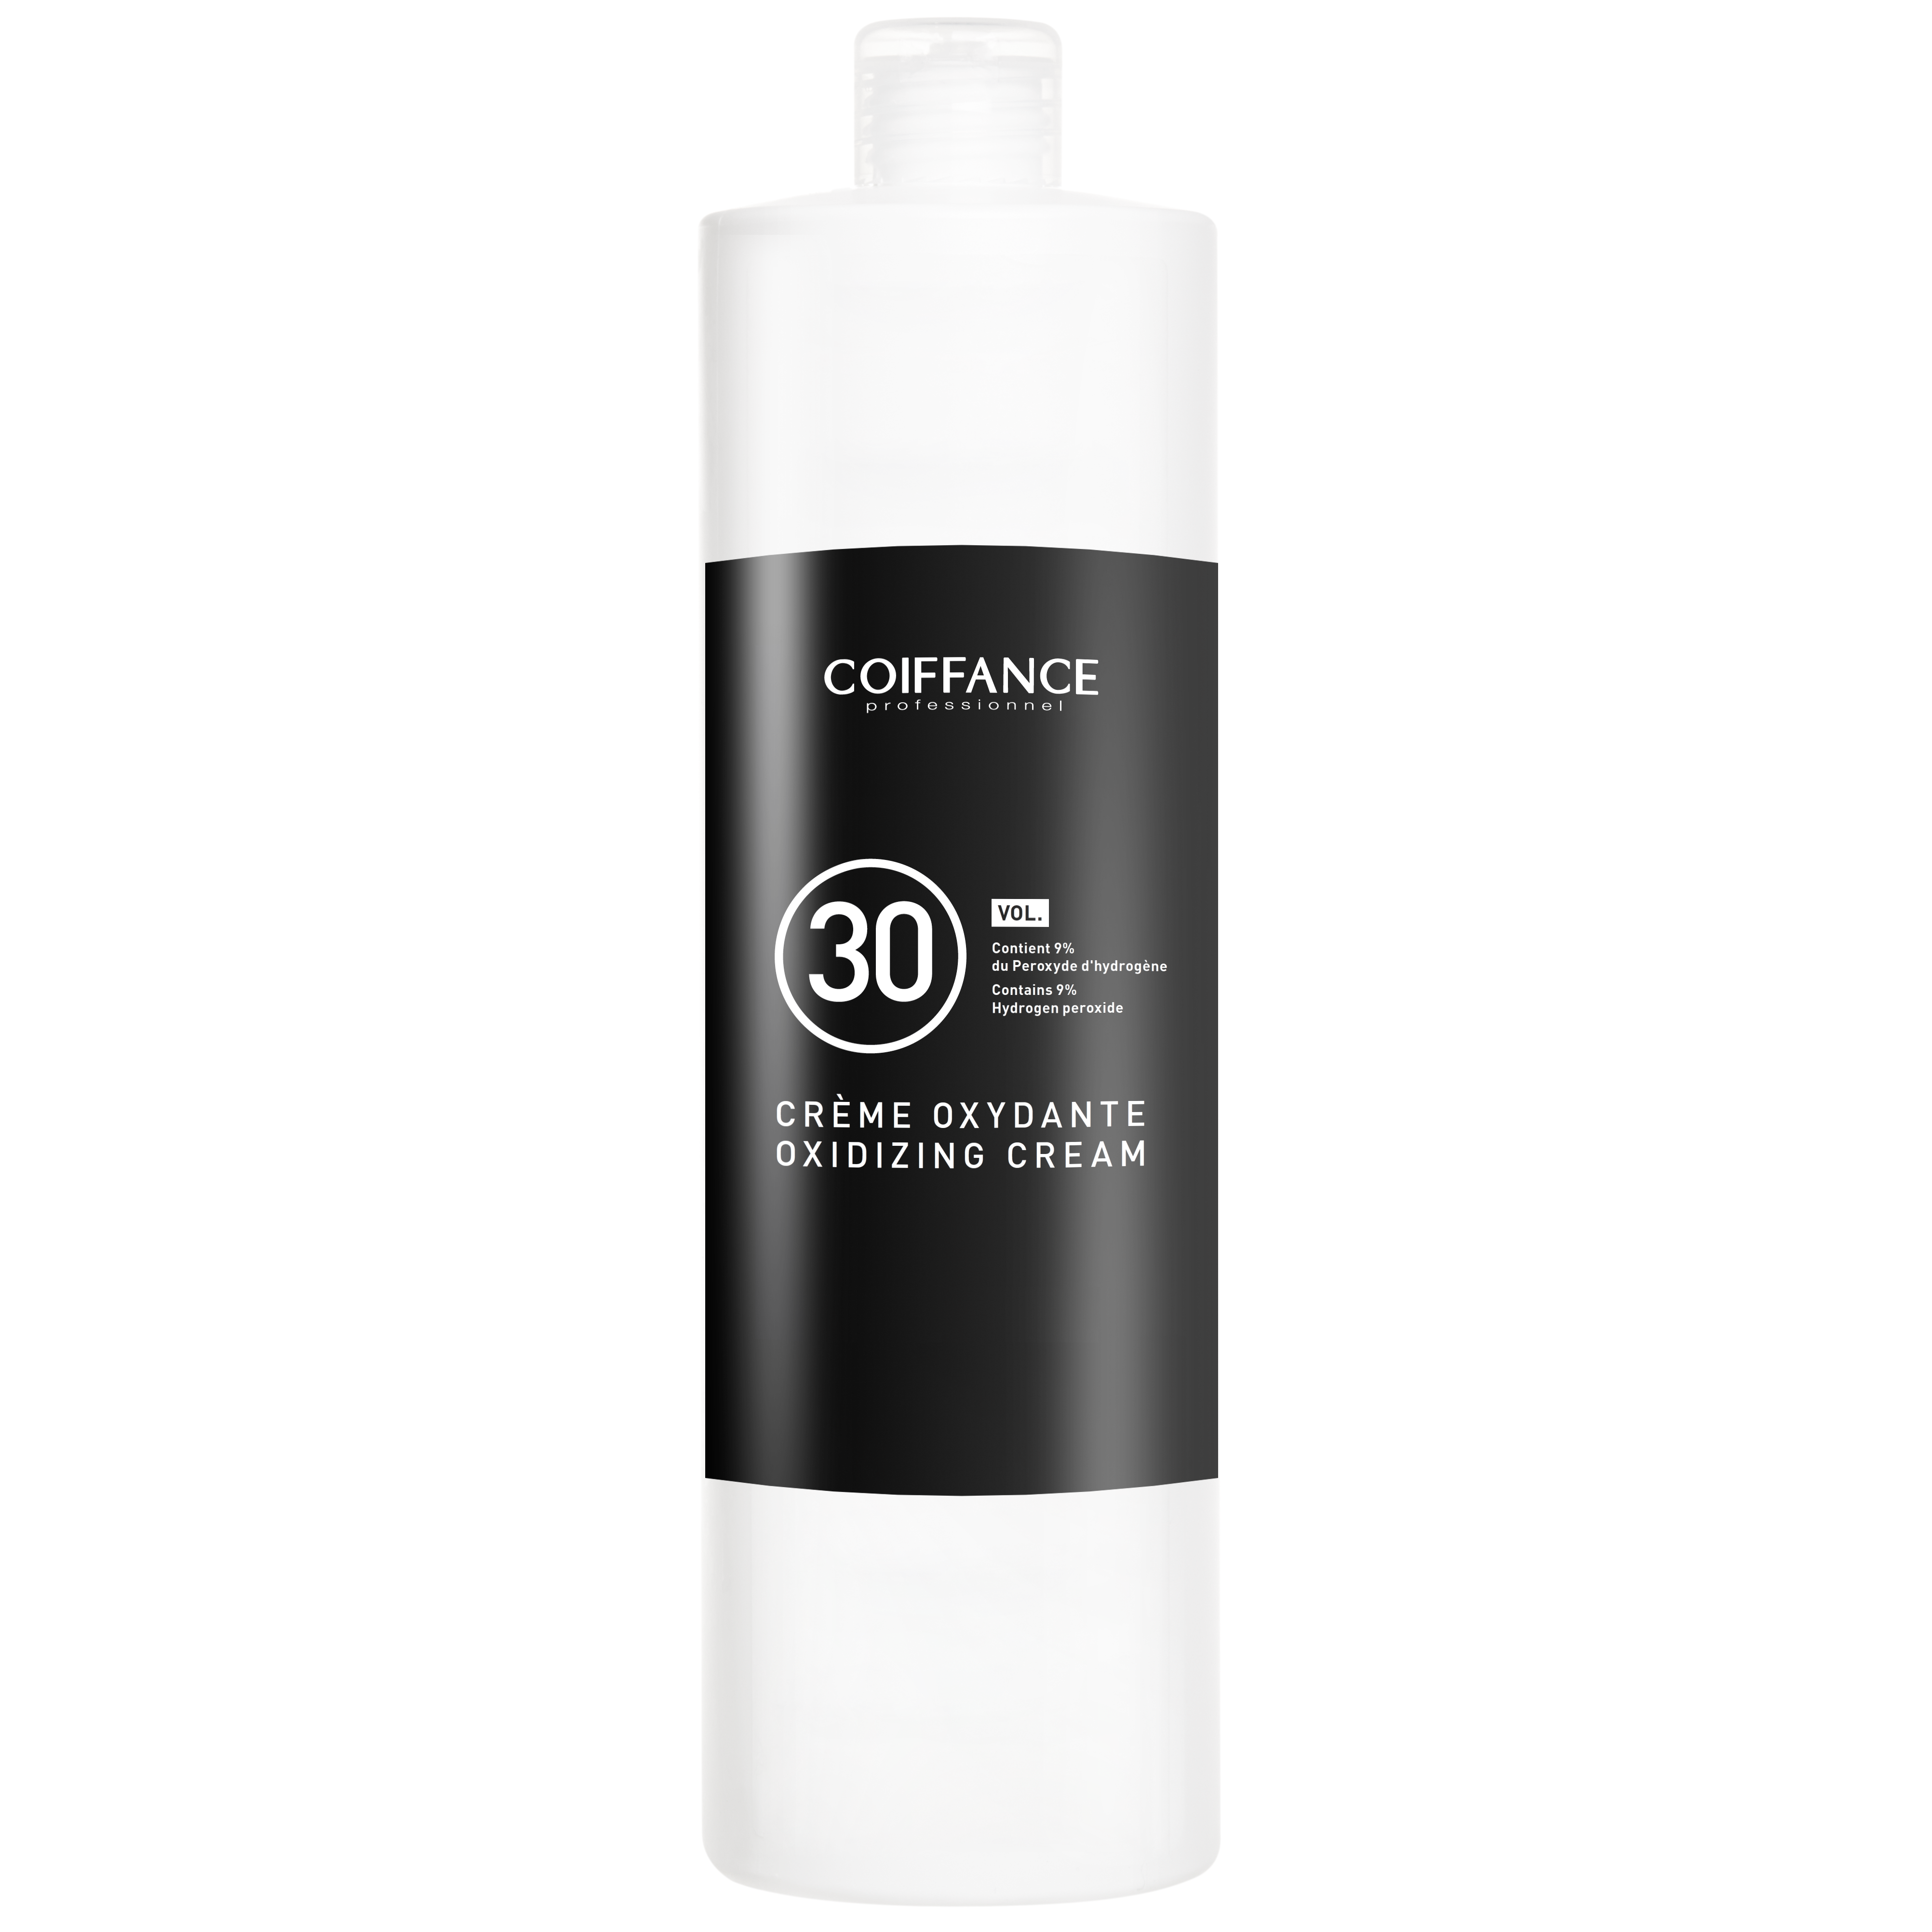 COIFFANCE, Крем-оксидант VOL30 (9%) Color Oxidising Cream, 150 мл.